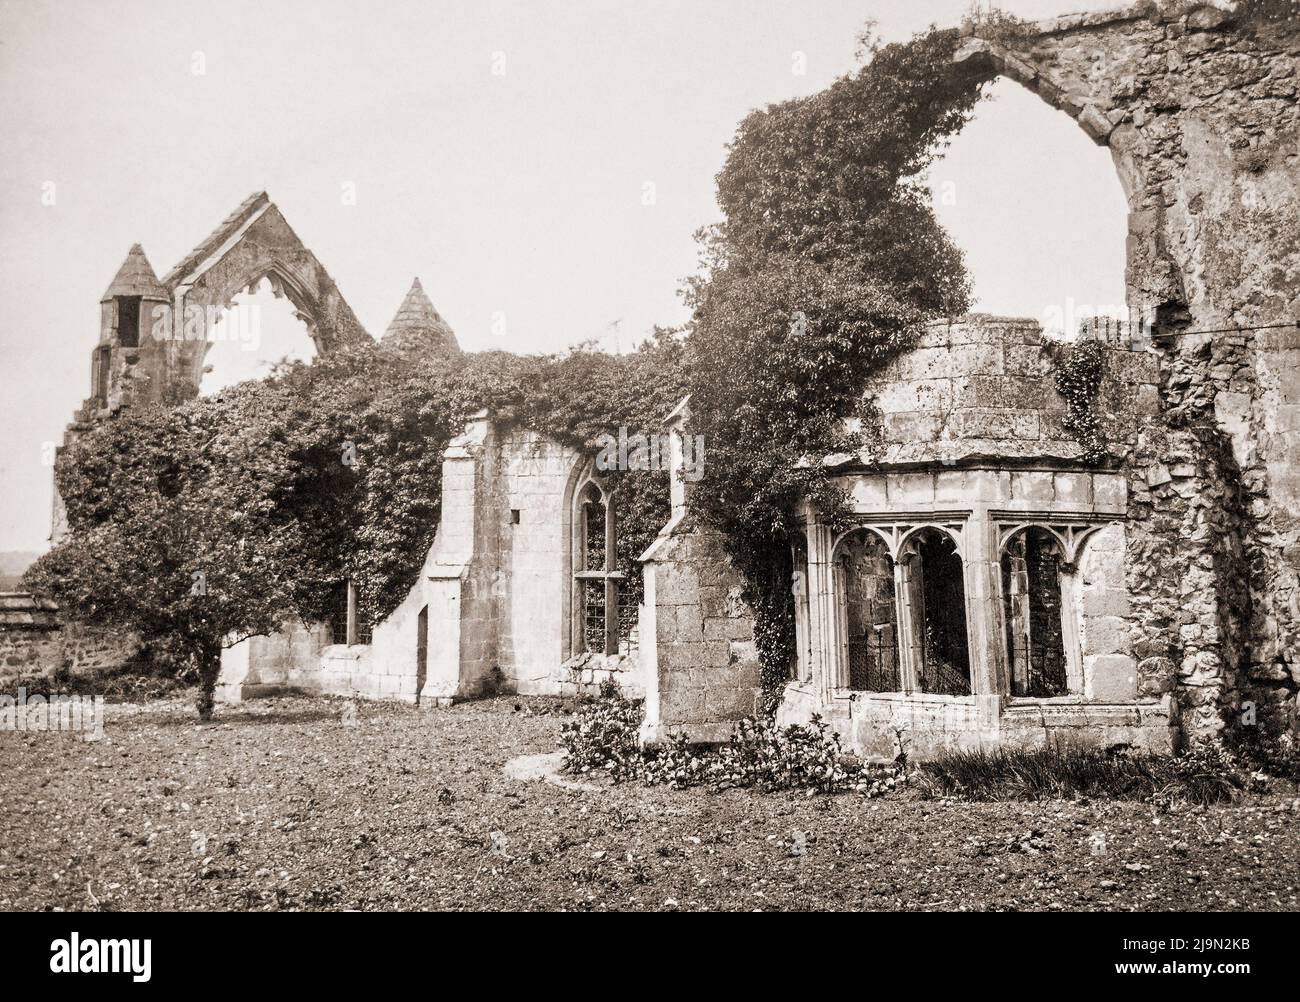 Abbaye de Haughmond, Shrewsbury, Angleterre, Royaume-Uni, vers 1885 Banque D'Images